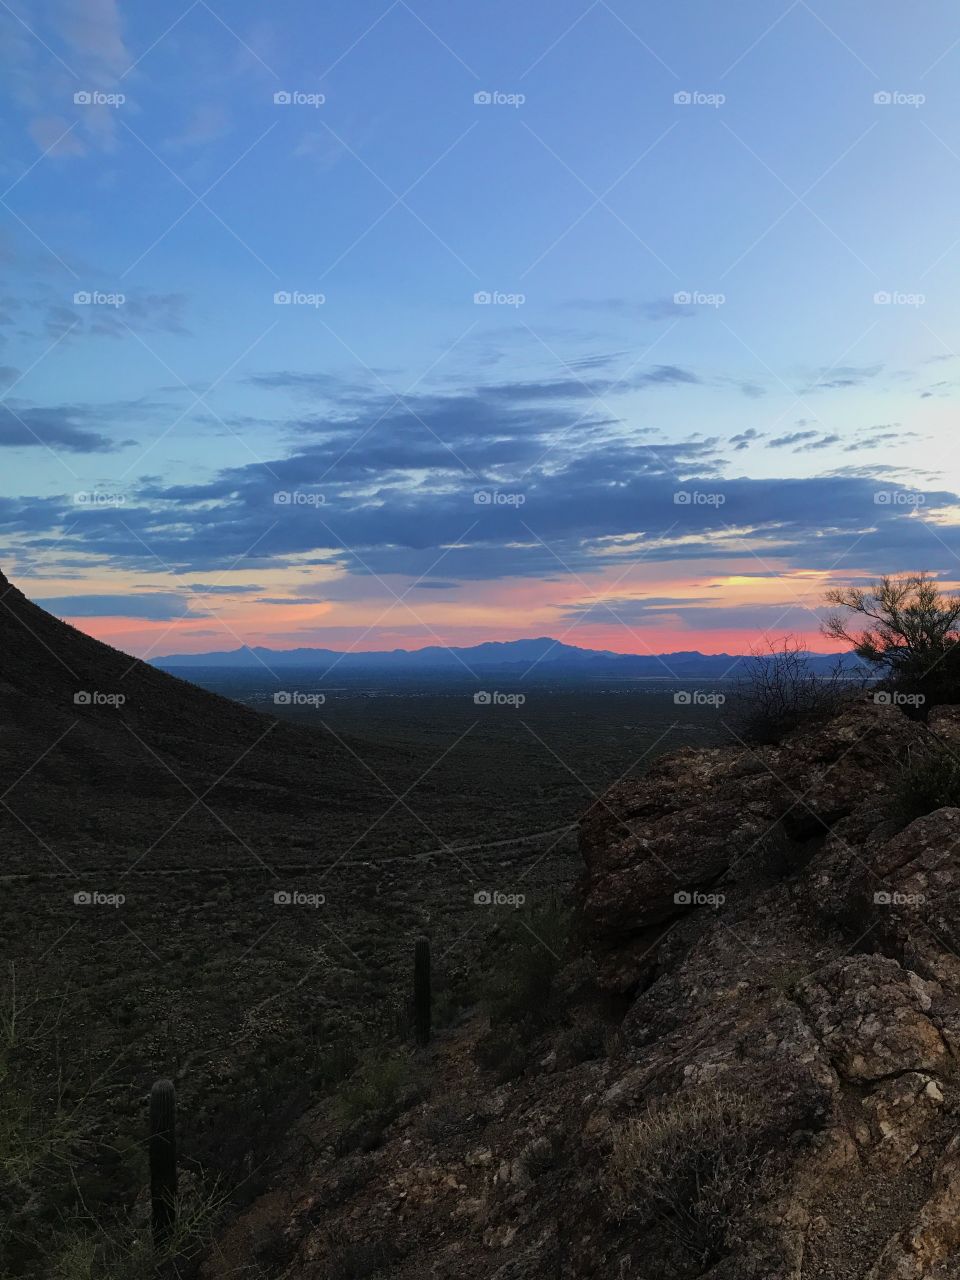 Tucson sunsets 